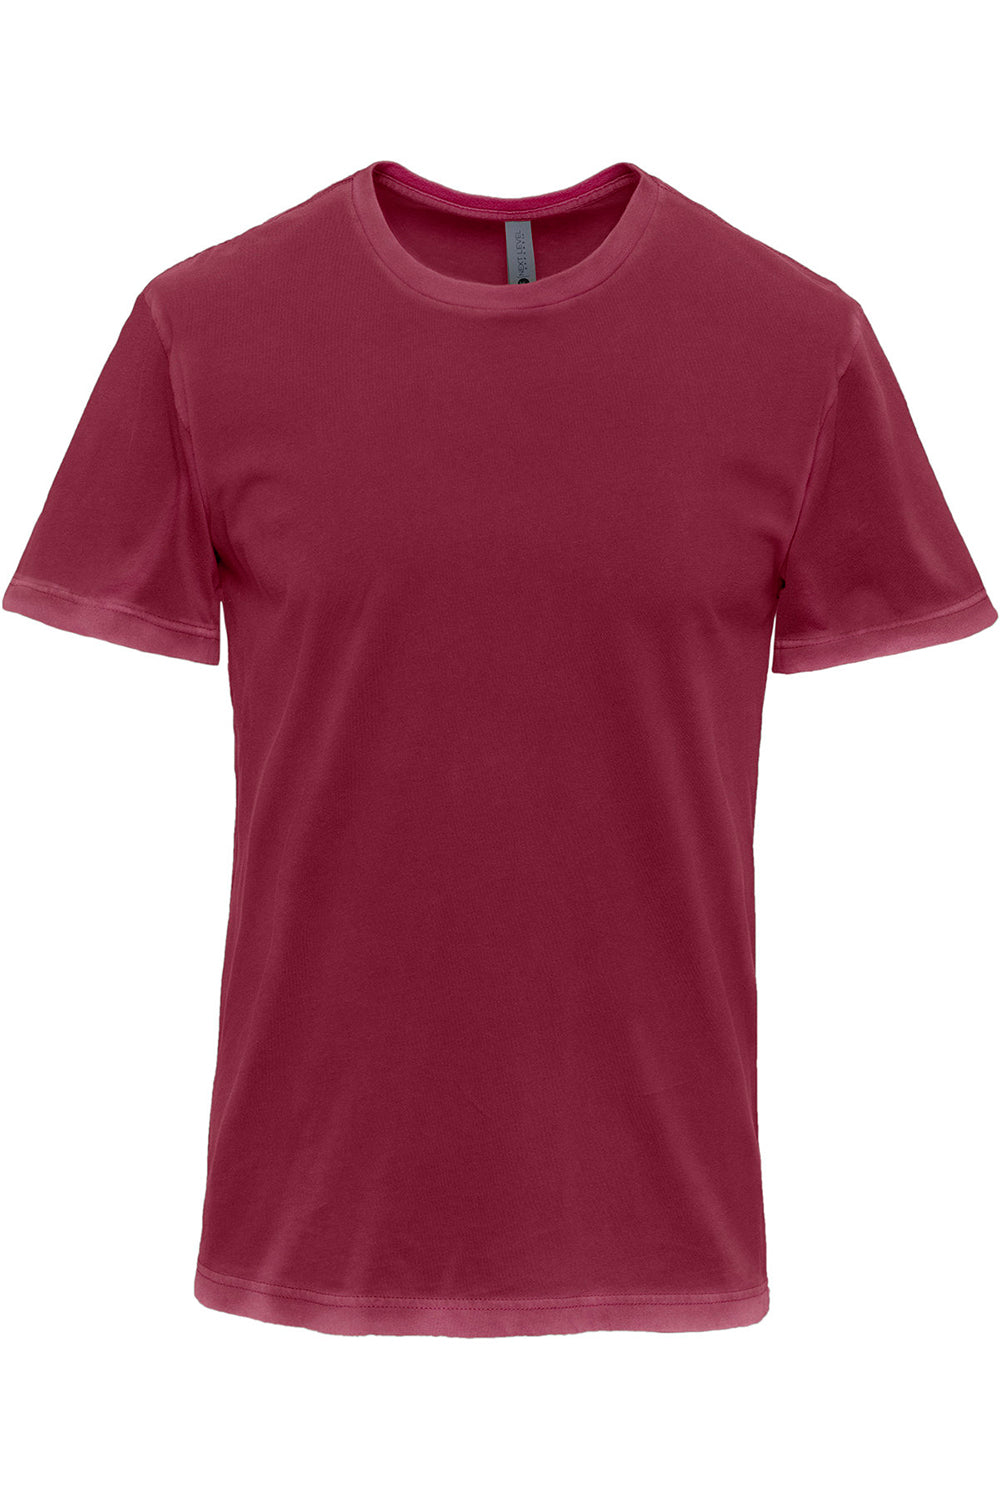 Next Level 3600SW Mens Soft Wash Short Sleeve Crewneck T-Shirt Cardinal Red Flat Front